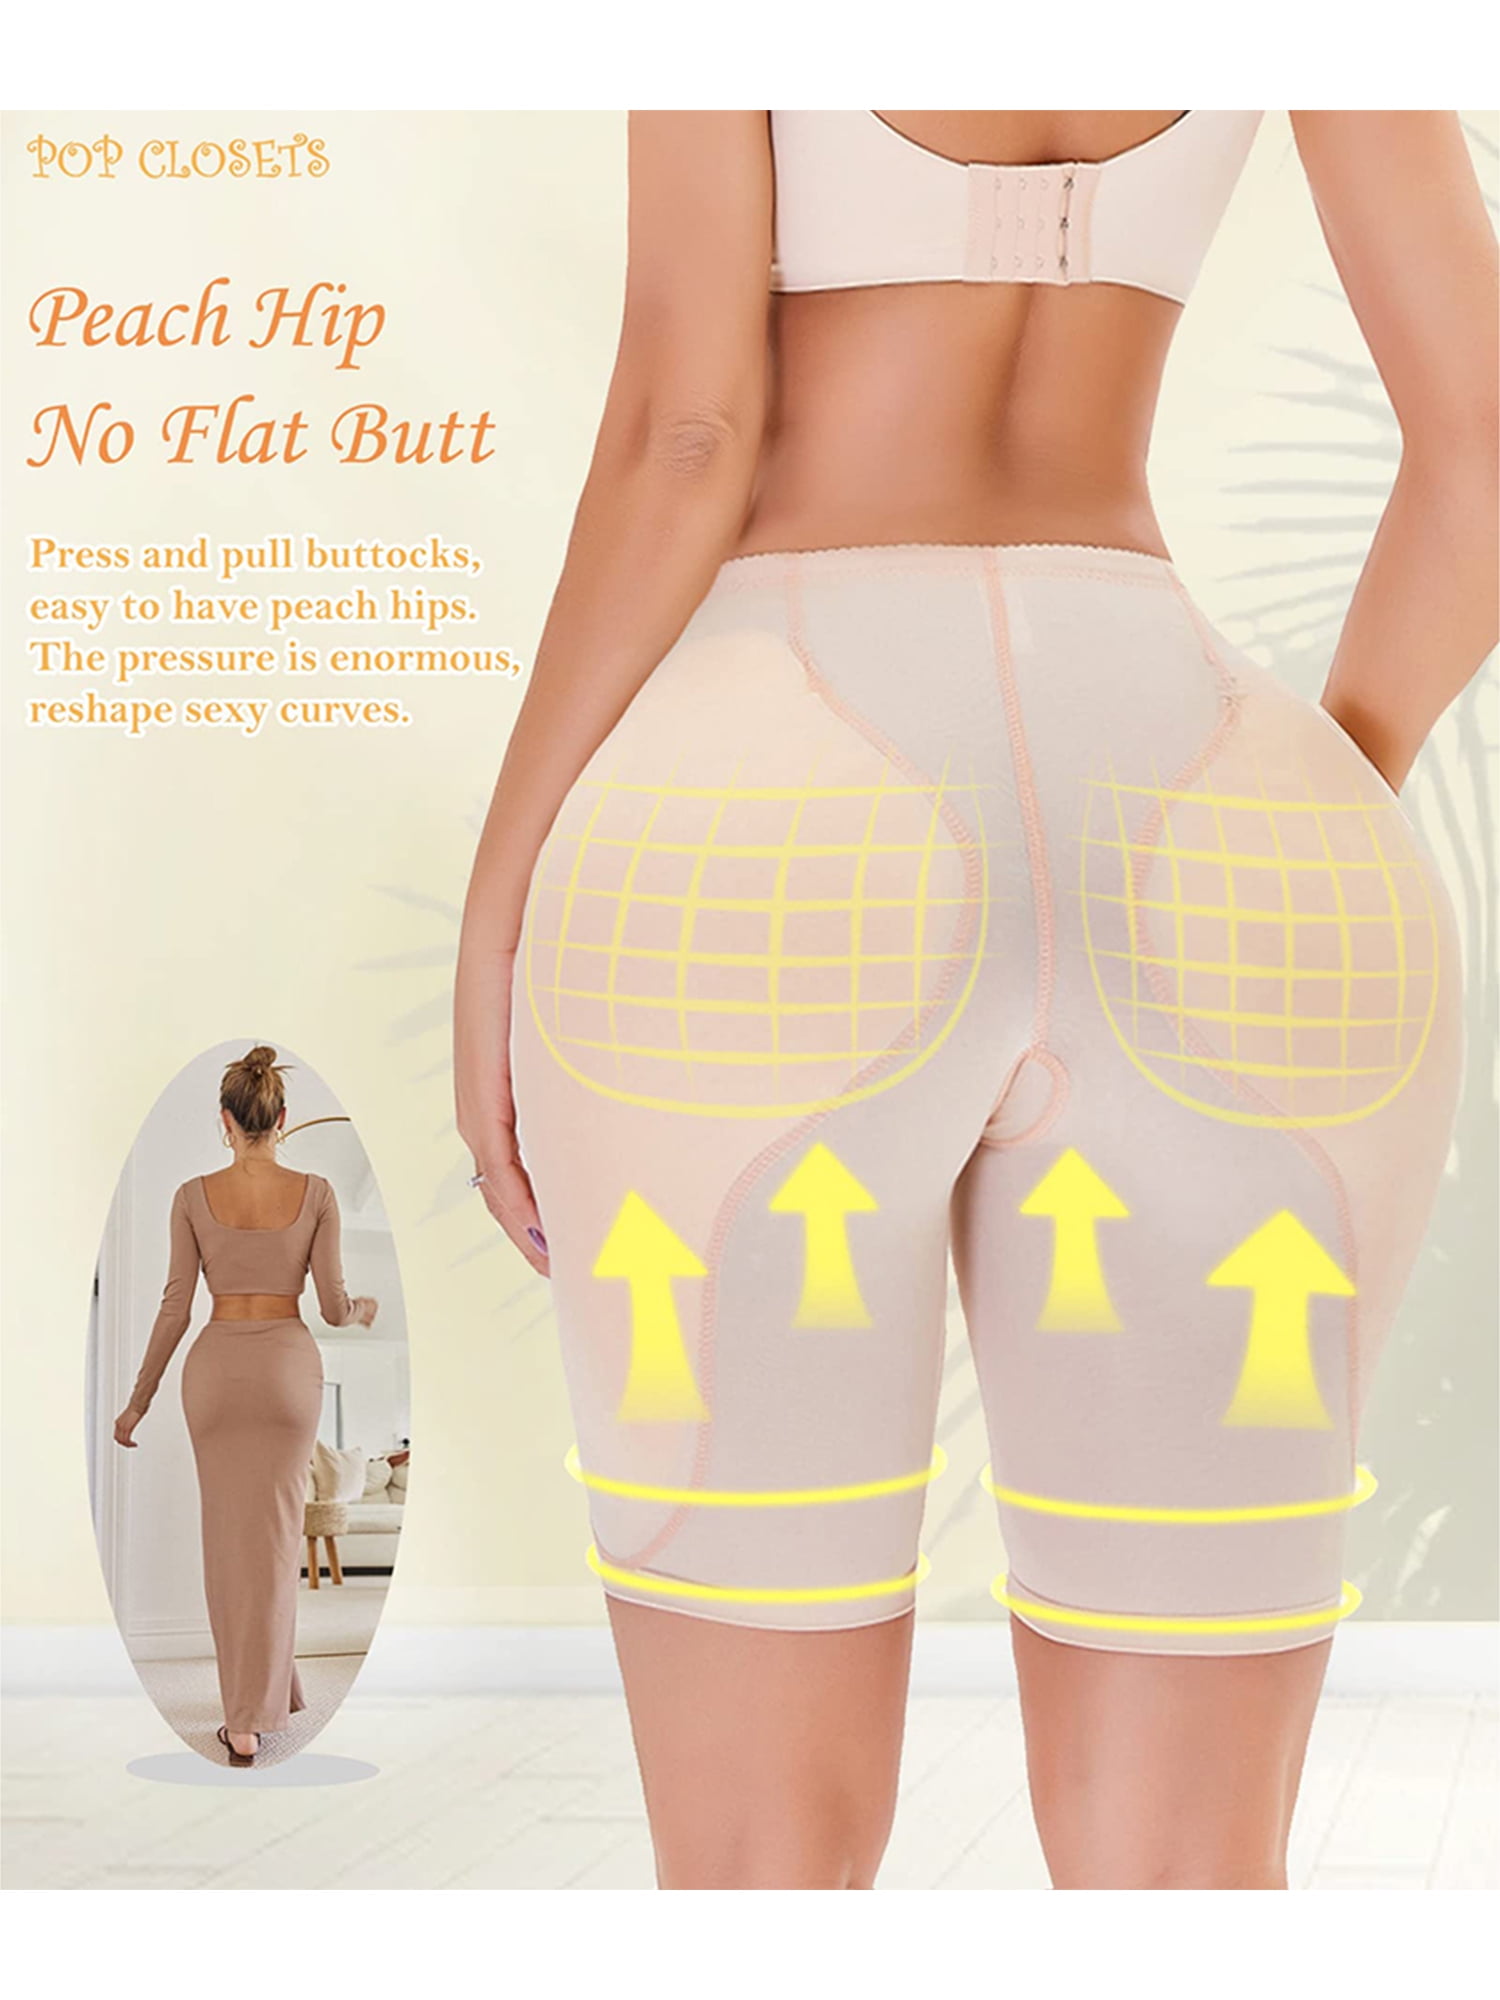 Women Butt Lifter Shaper Panties Sexy Body Shaper with Pads – Come4Buy eShop